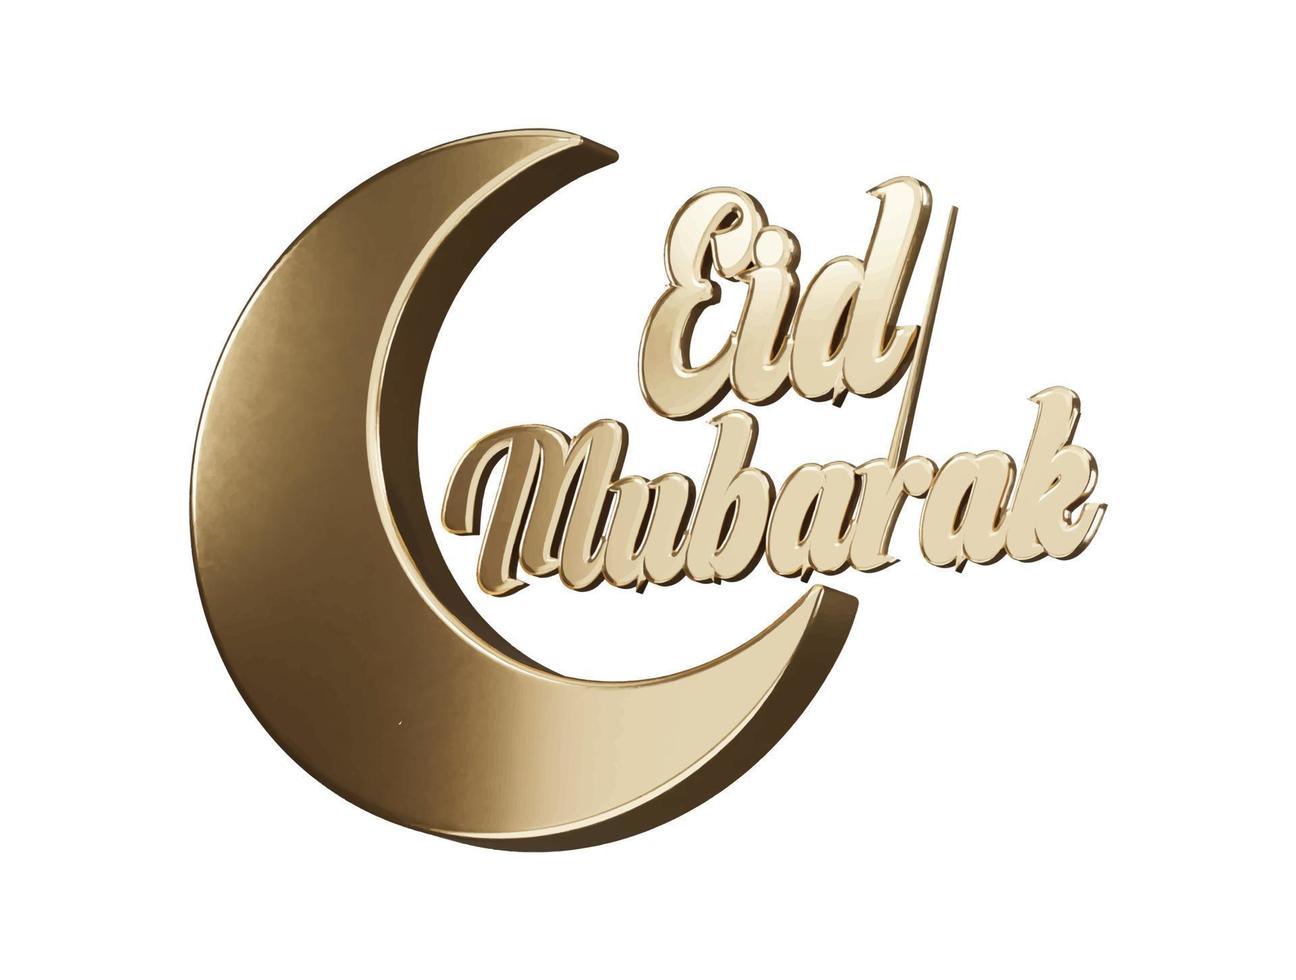 eid mubarak with a crescent moon 3d rendering vector illustration